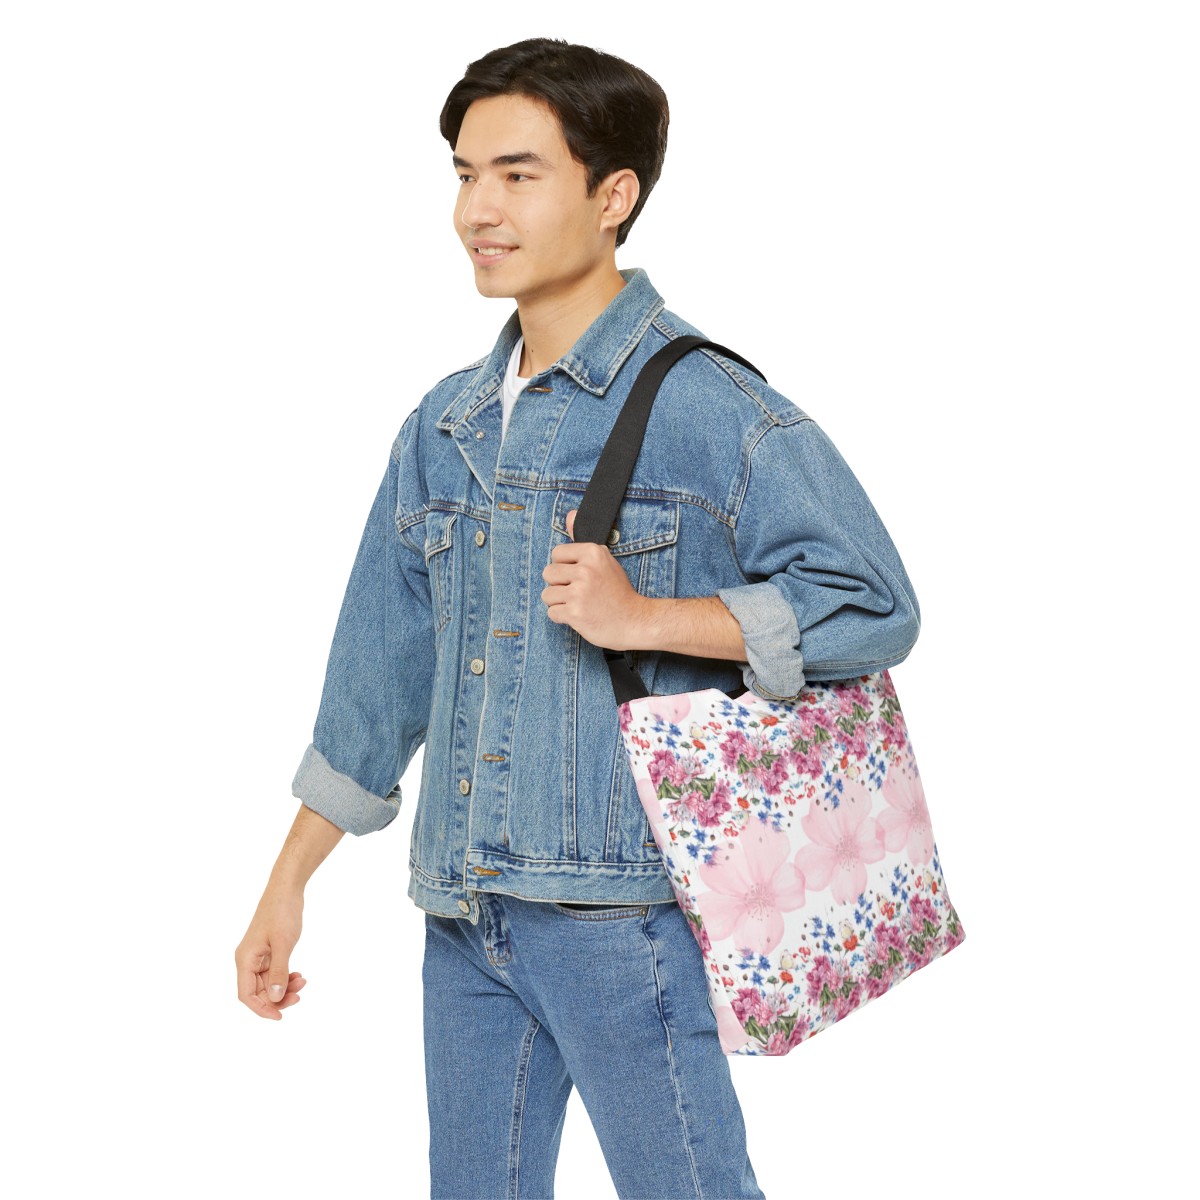 Pinkish Adjustable Tote Bag (AOP) product thumbnail image